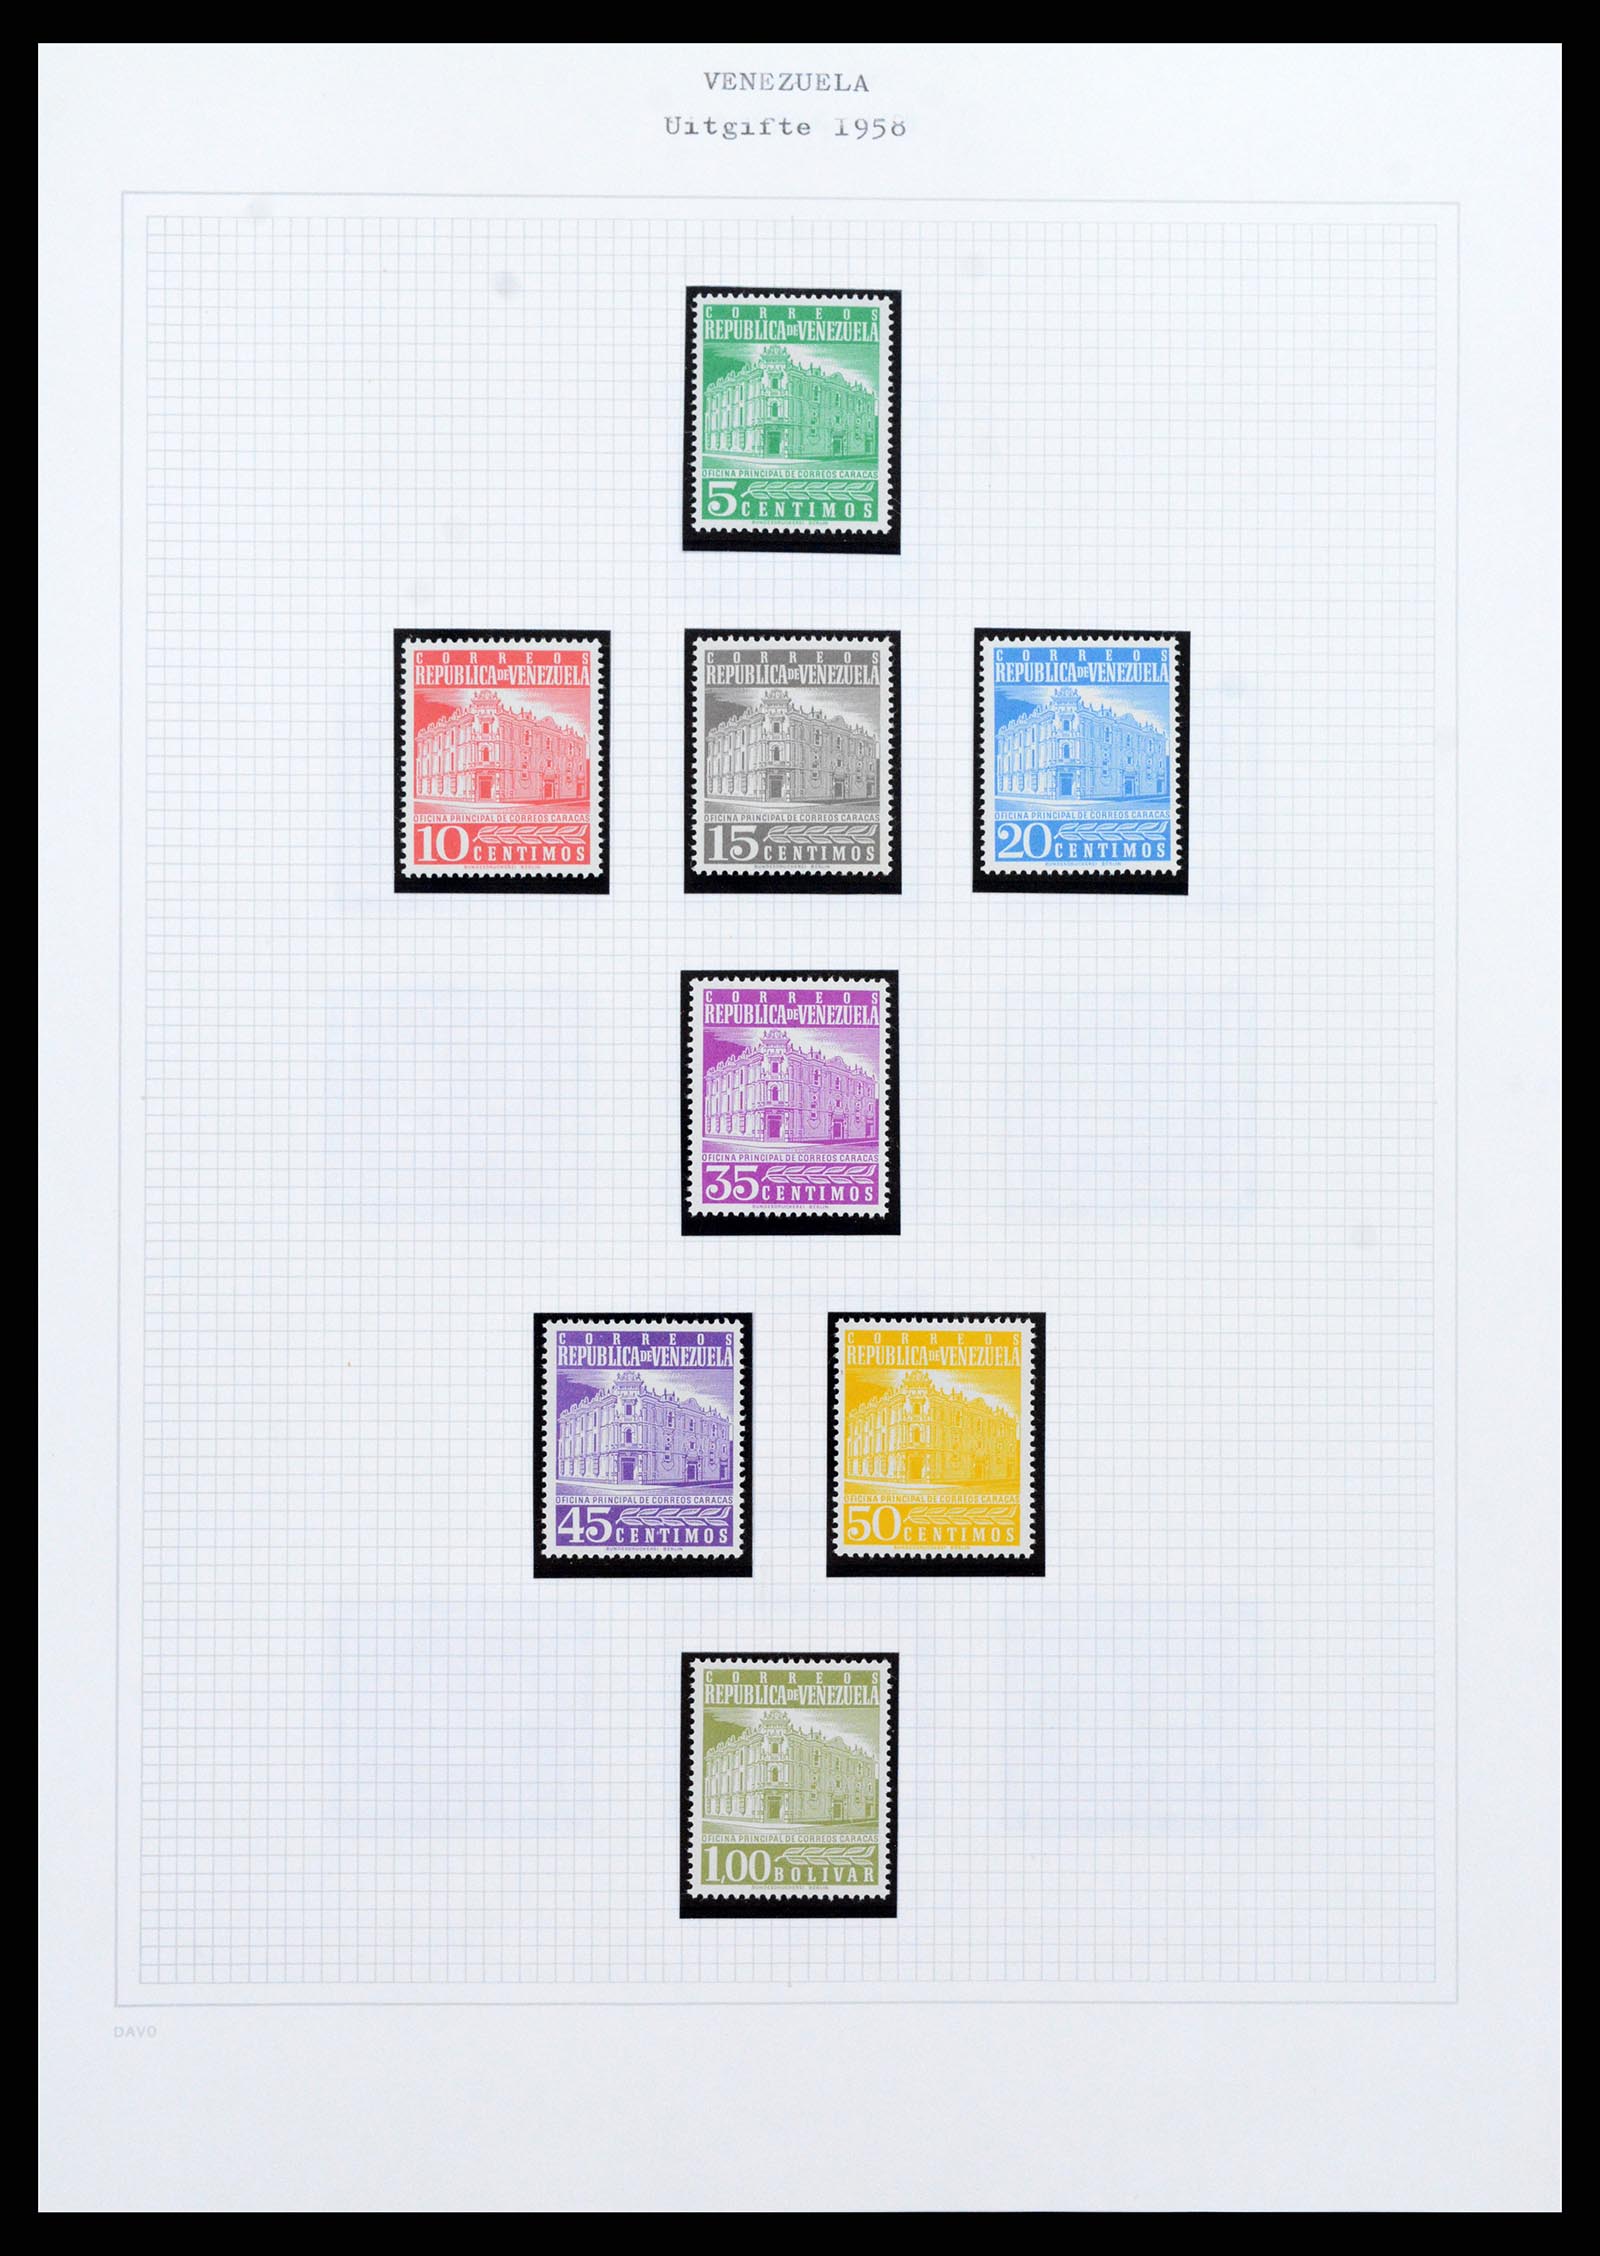 37353 031 - Stamp collection 37353 Venezuela 1880-1960.